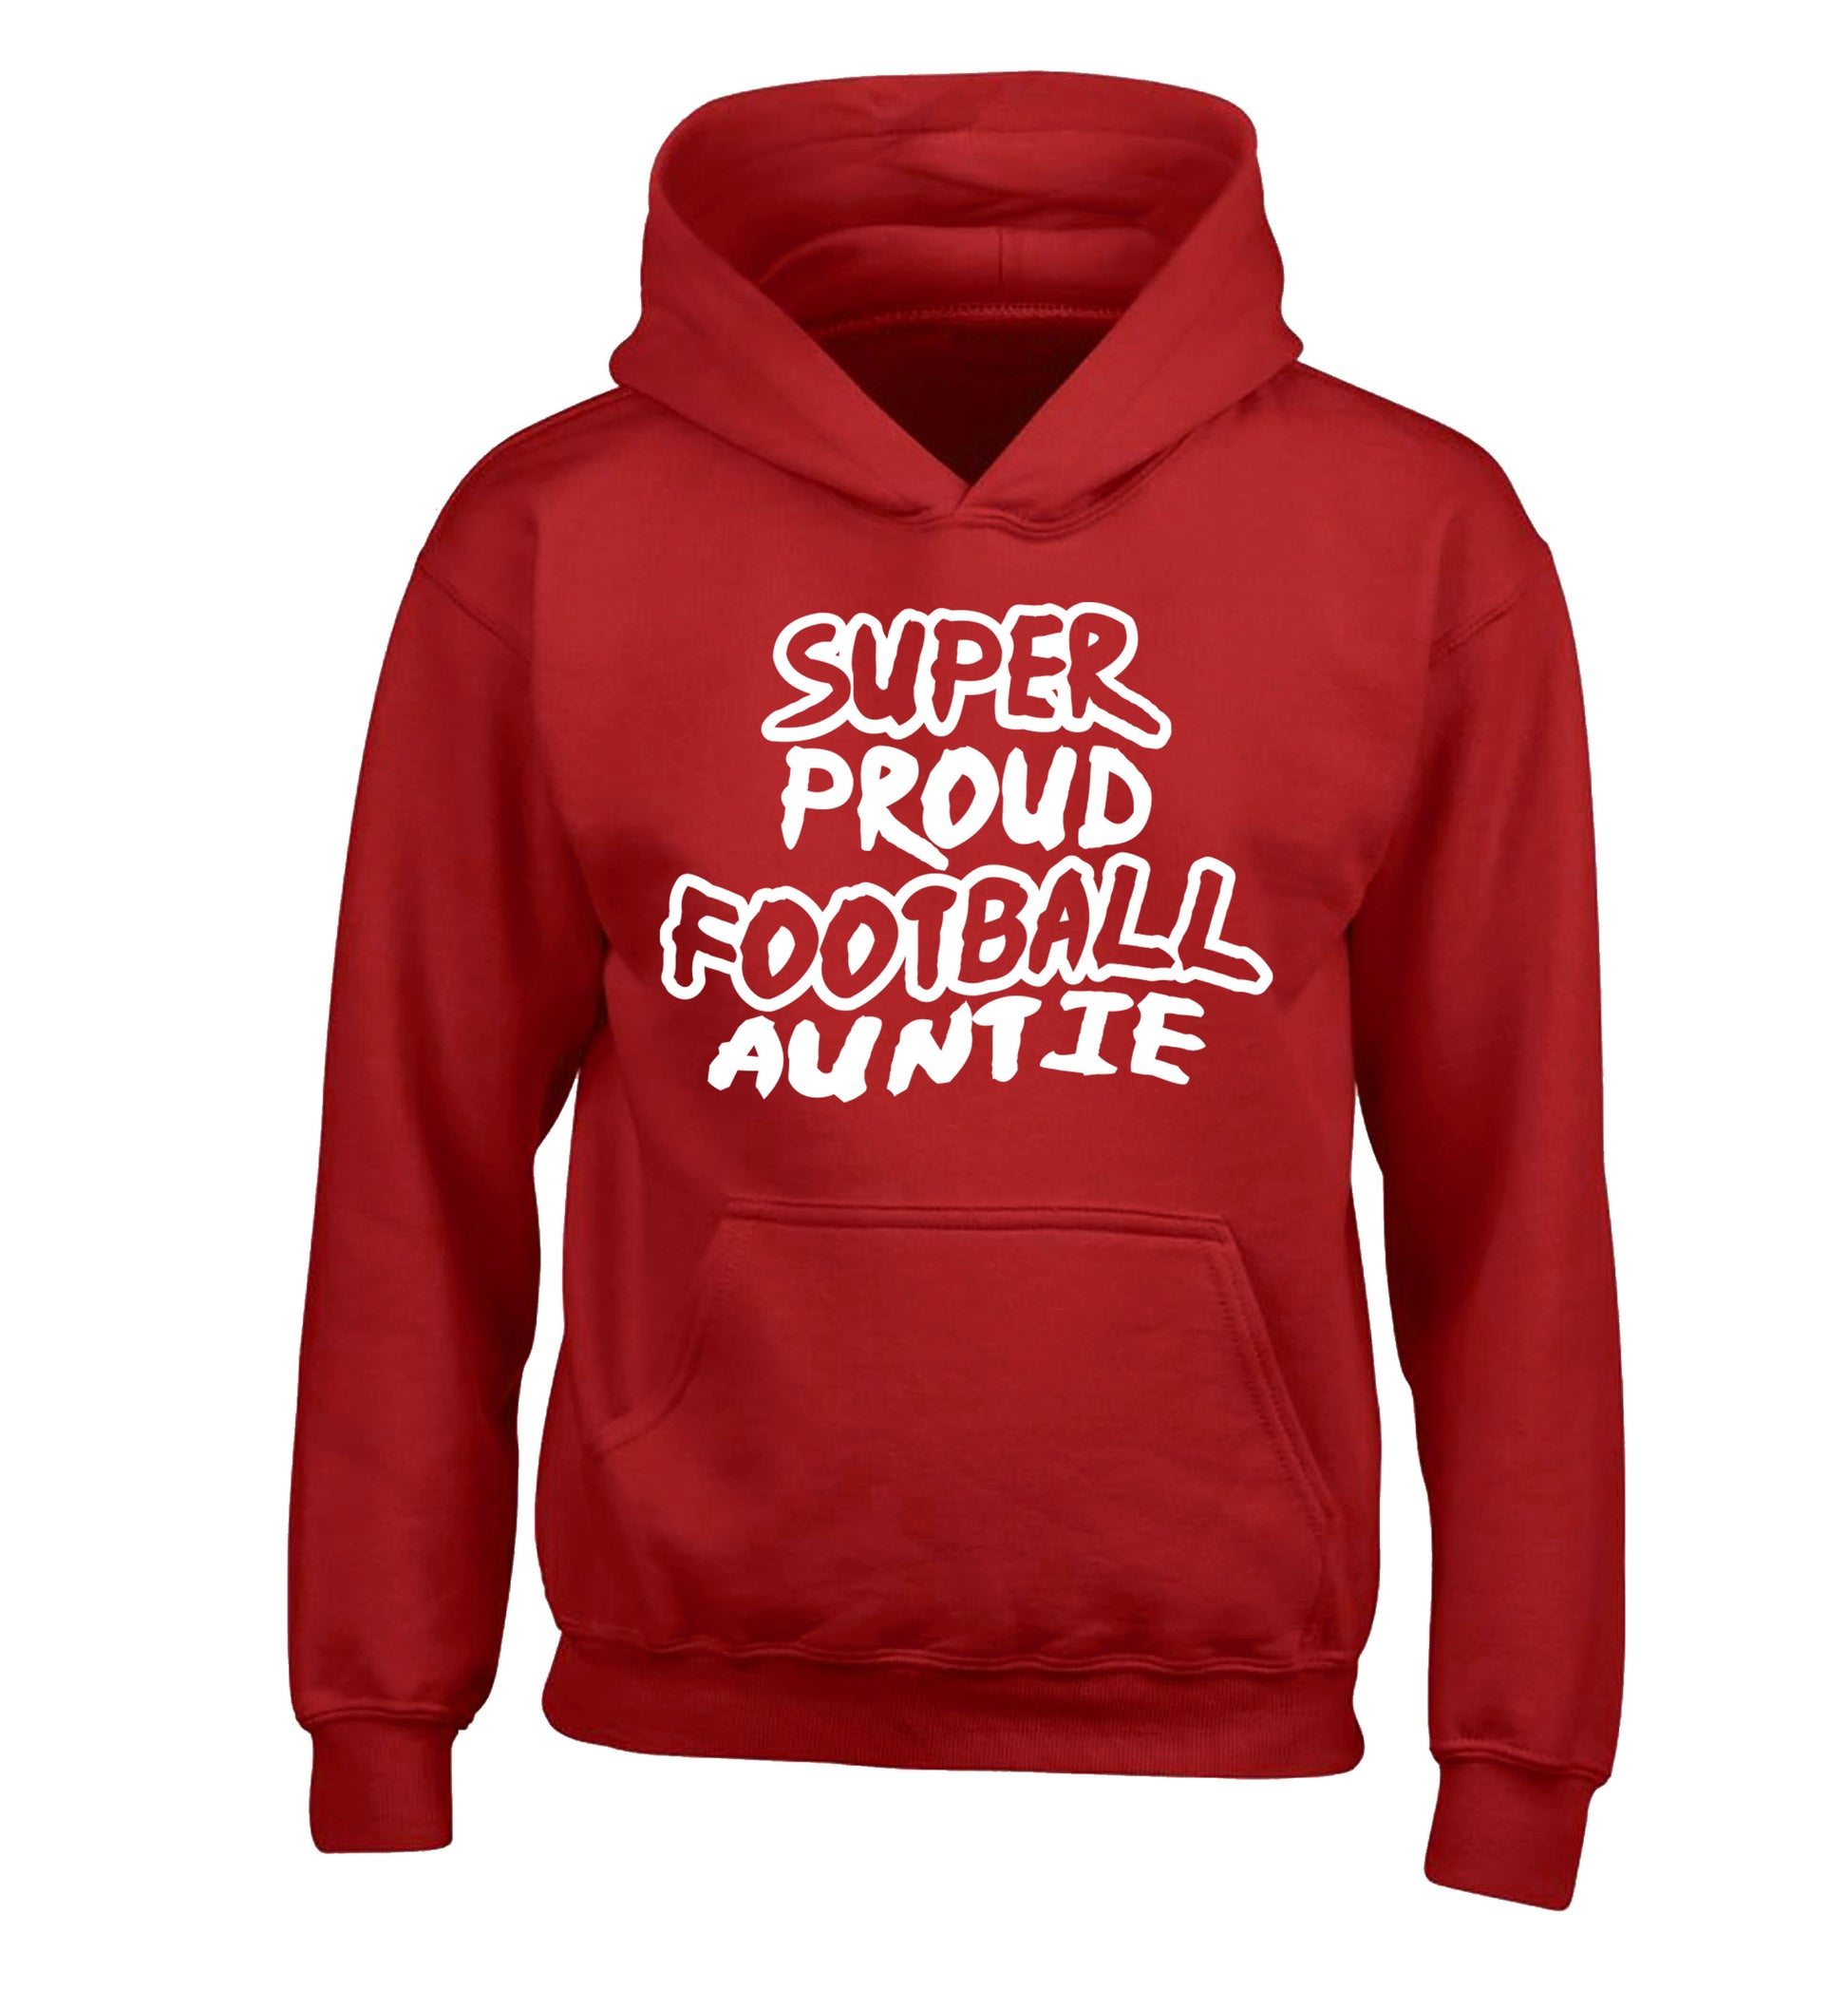 Super proud football auntie children's red hoodie 12-14 Years